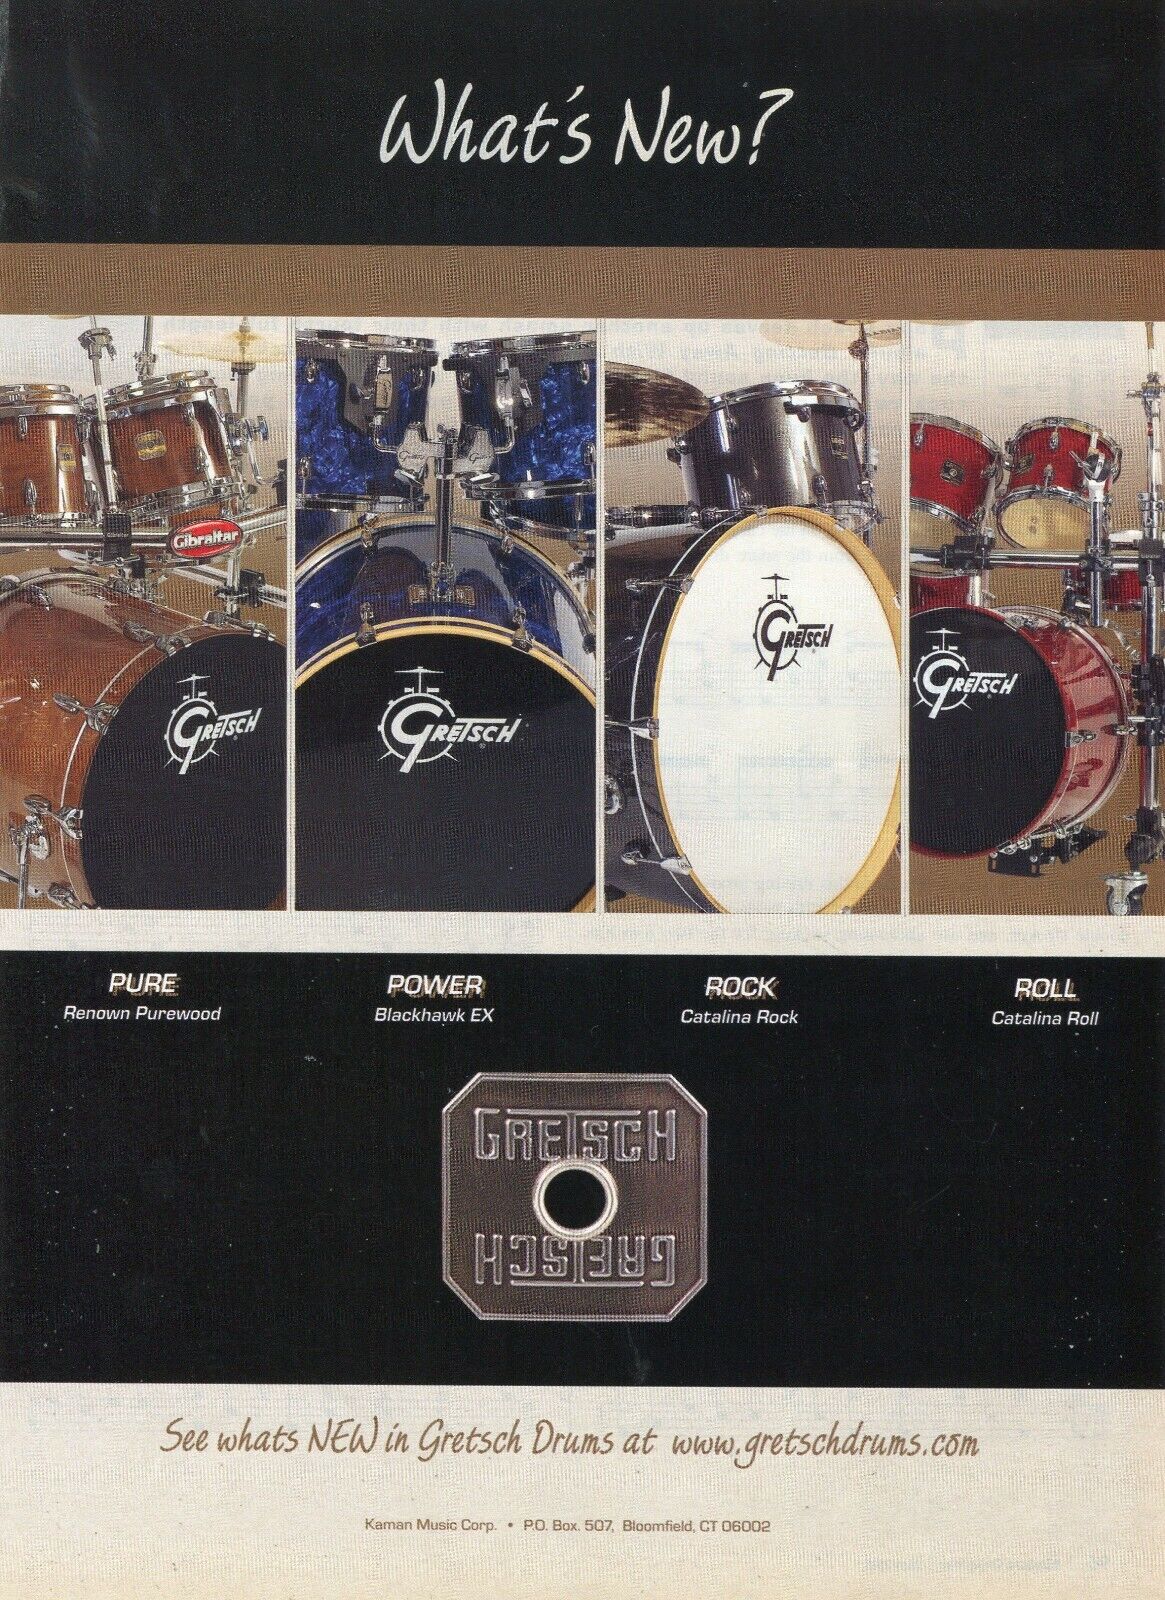 2005 Print Ad of Kaman Gretsch Drum Kits Renown Purewood, Blackhawk EX, Catalina